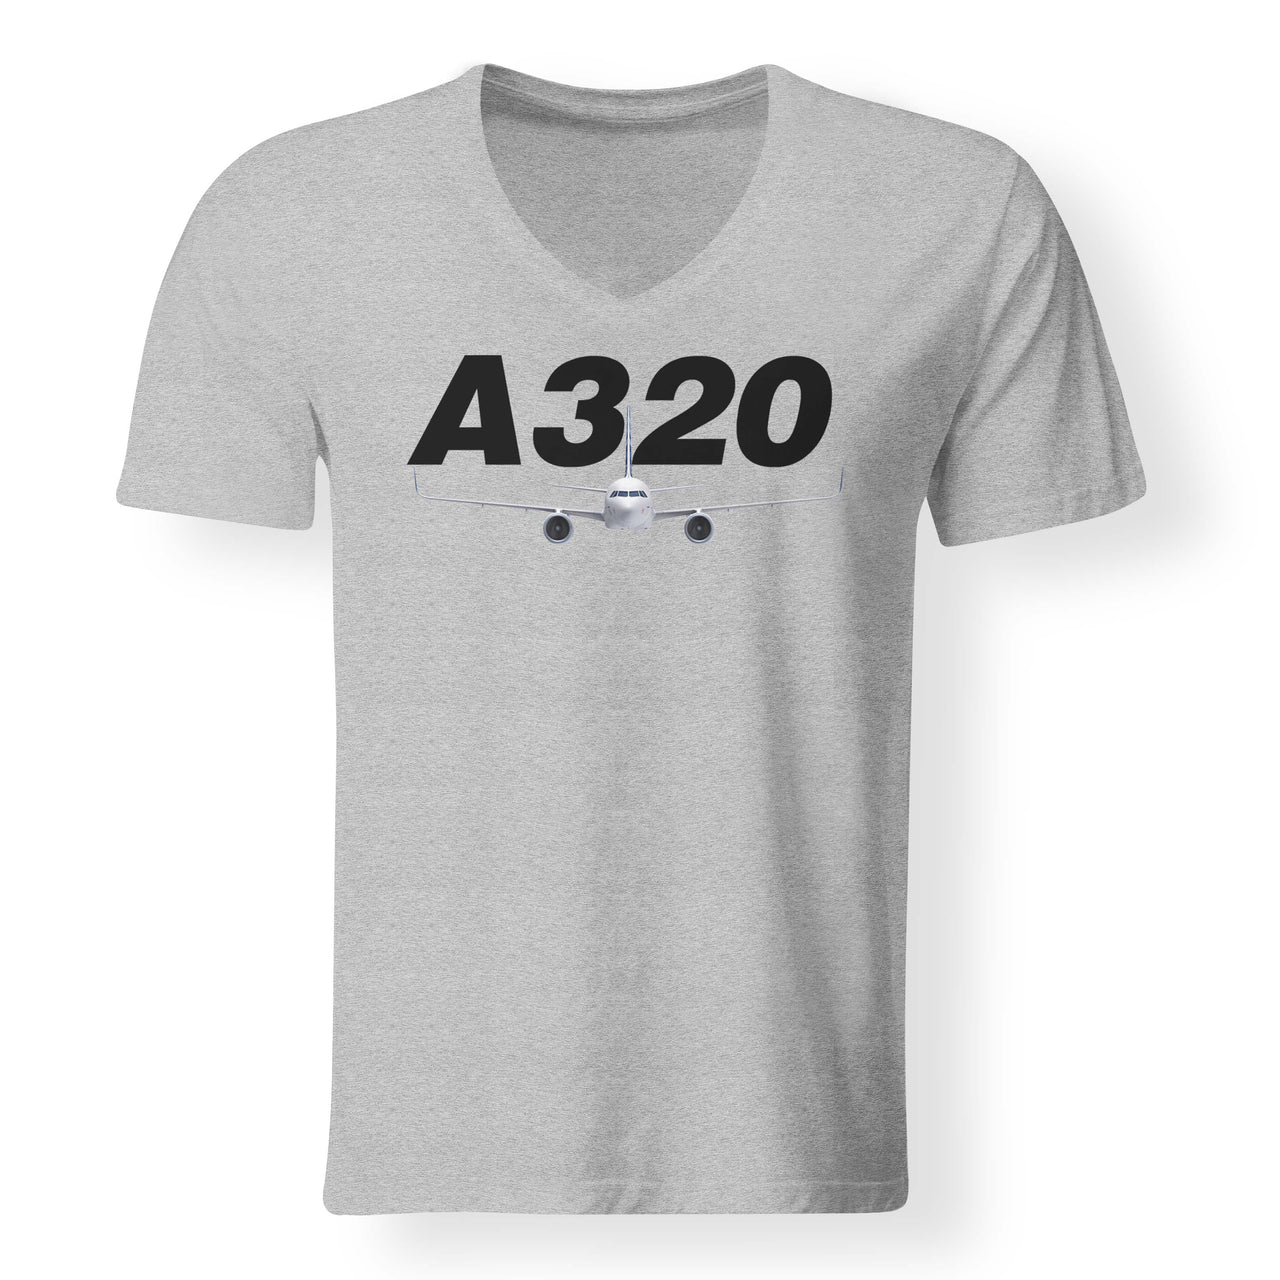 Super Airbus A320 Designed V-Neck T-Shirts